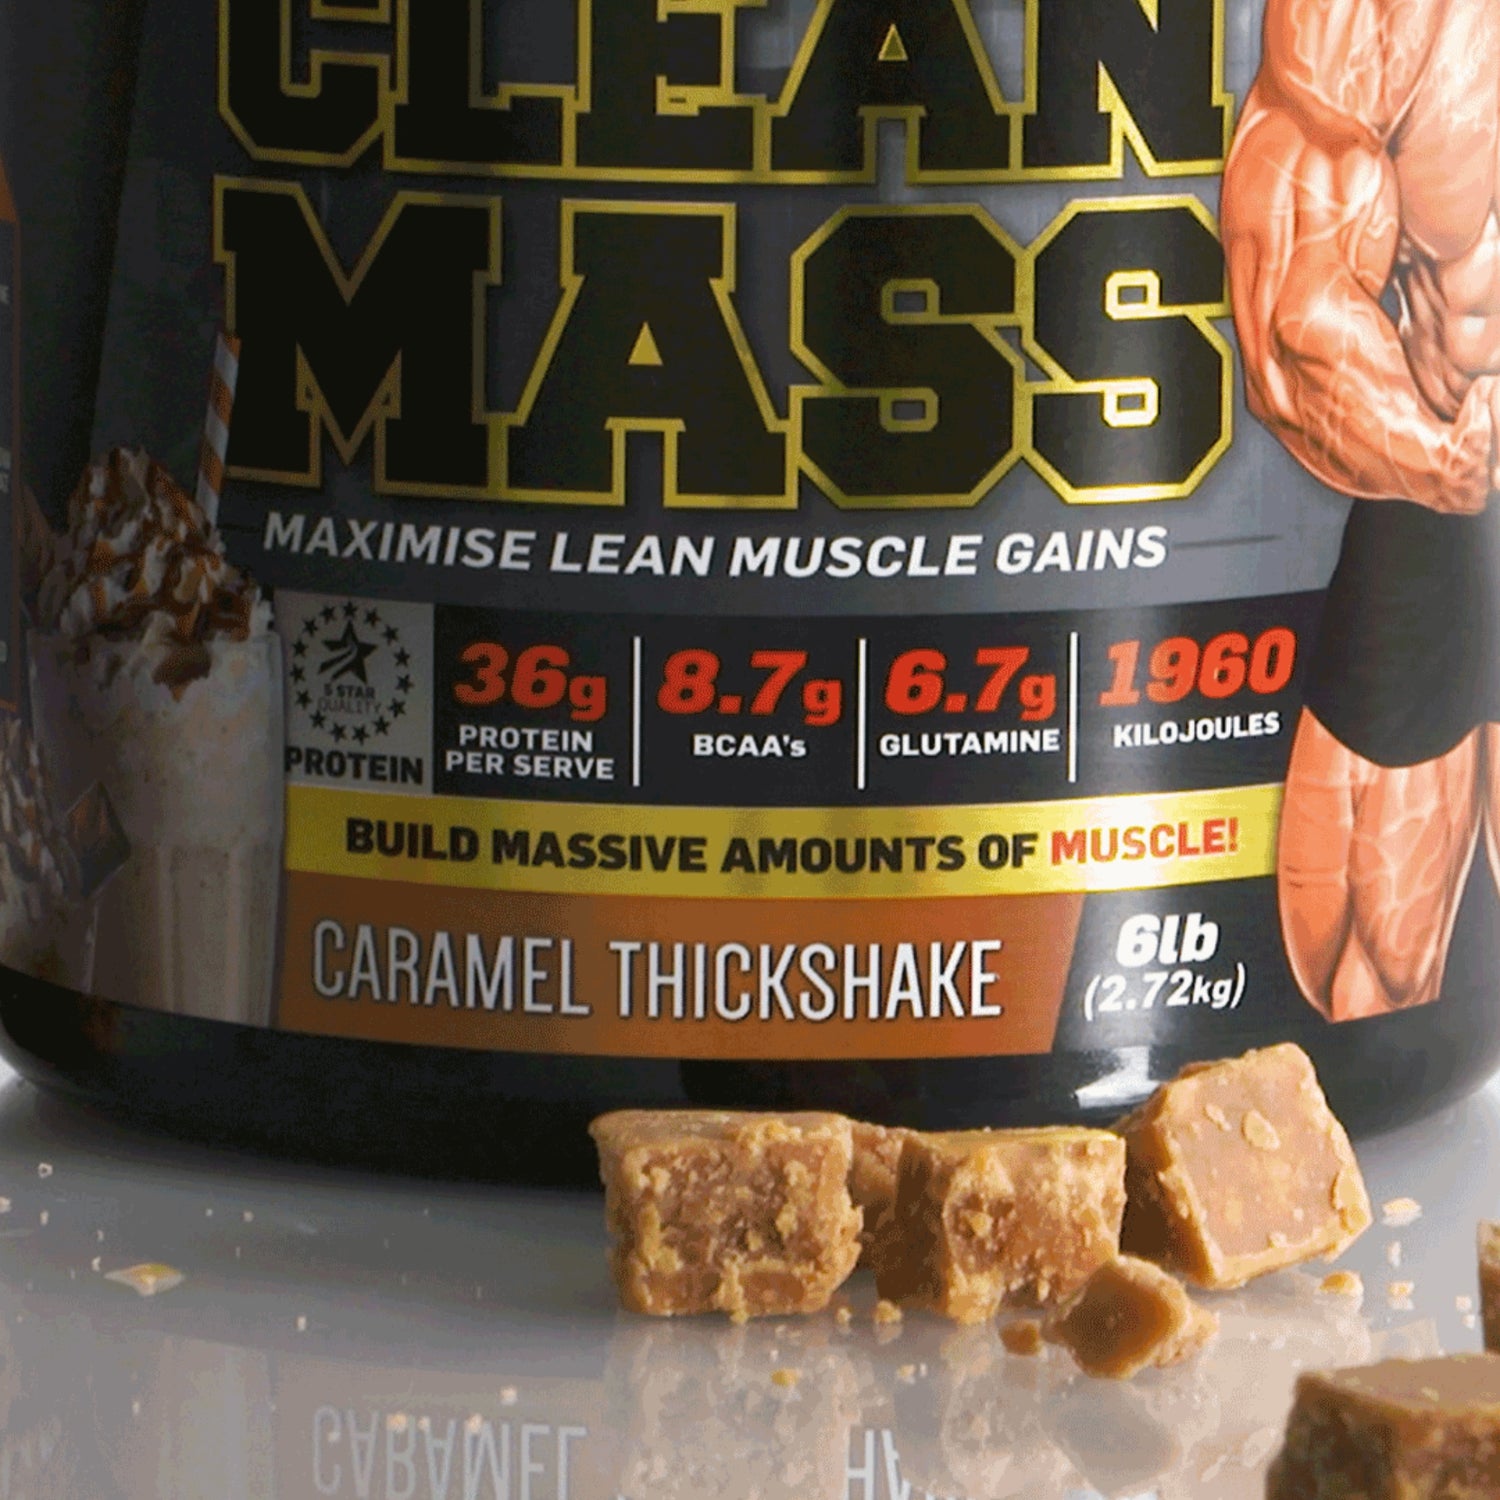 Maxs Clean Mass Caramel thickshake